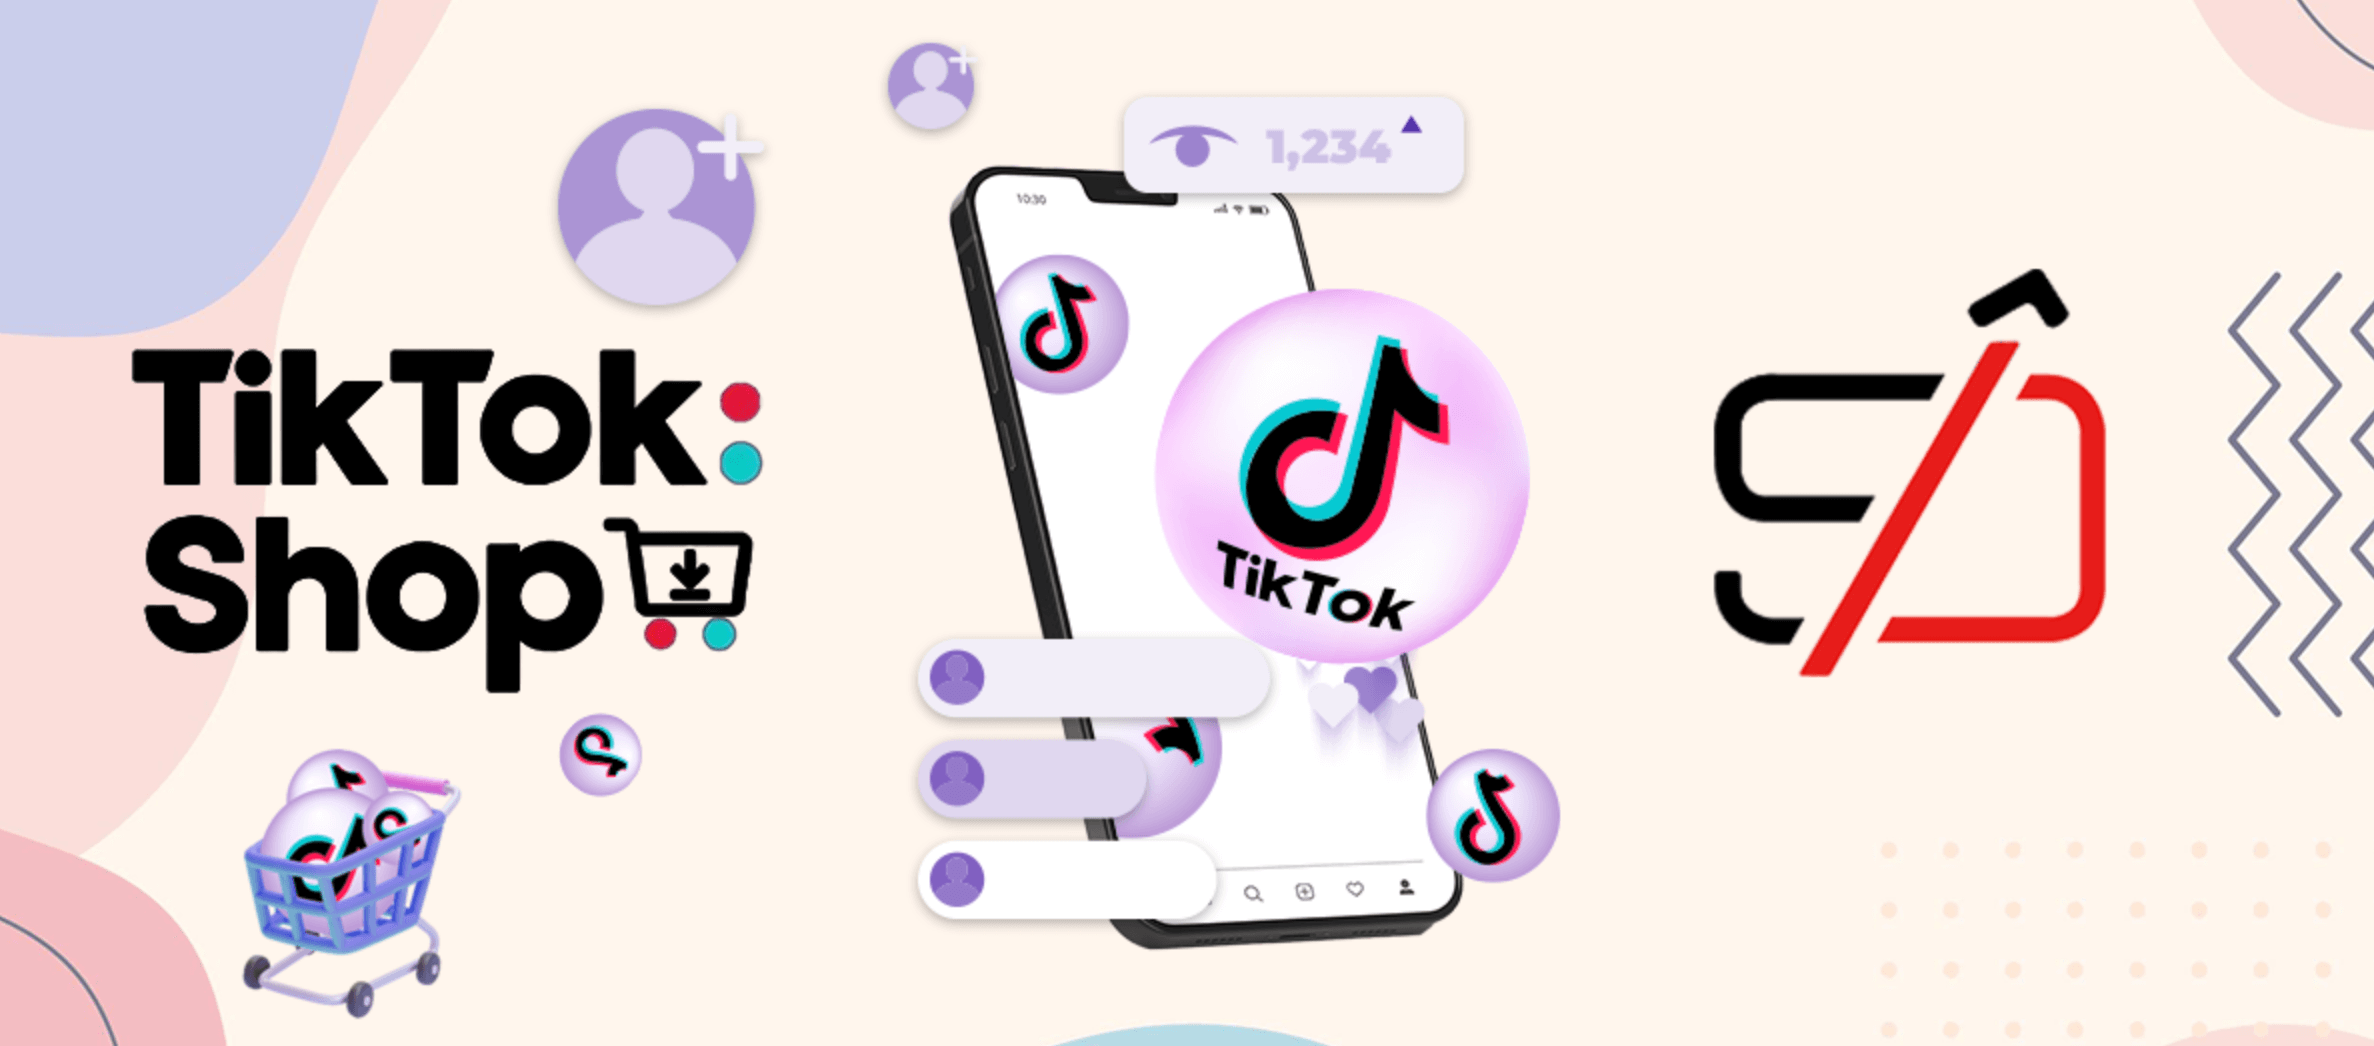 Split Dragon showcasing TikTok's brand new e-commerce venture